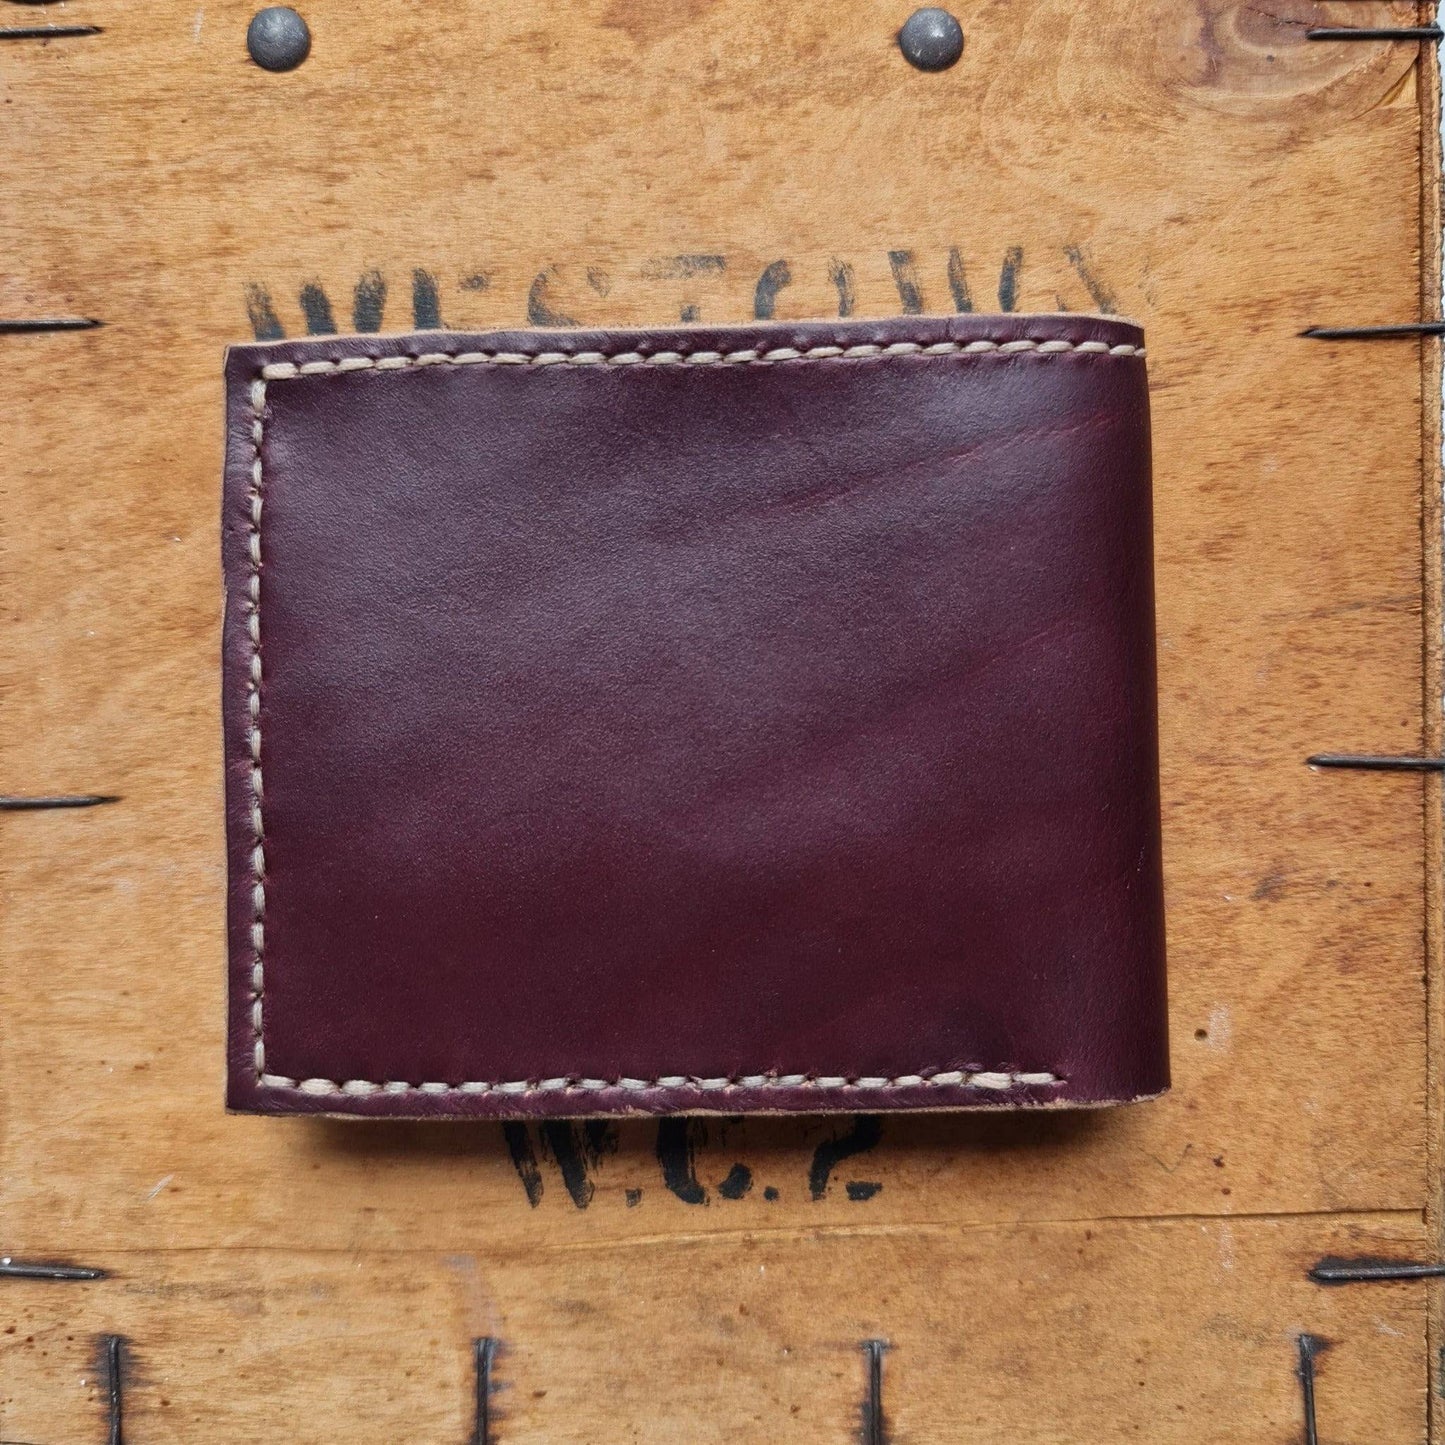 No. 1 Wrangler Card Holders, Horween Burgundy Chromexcel Leather, Back